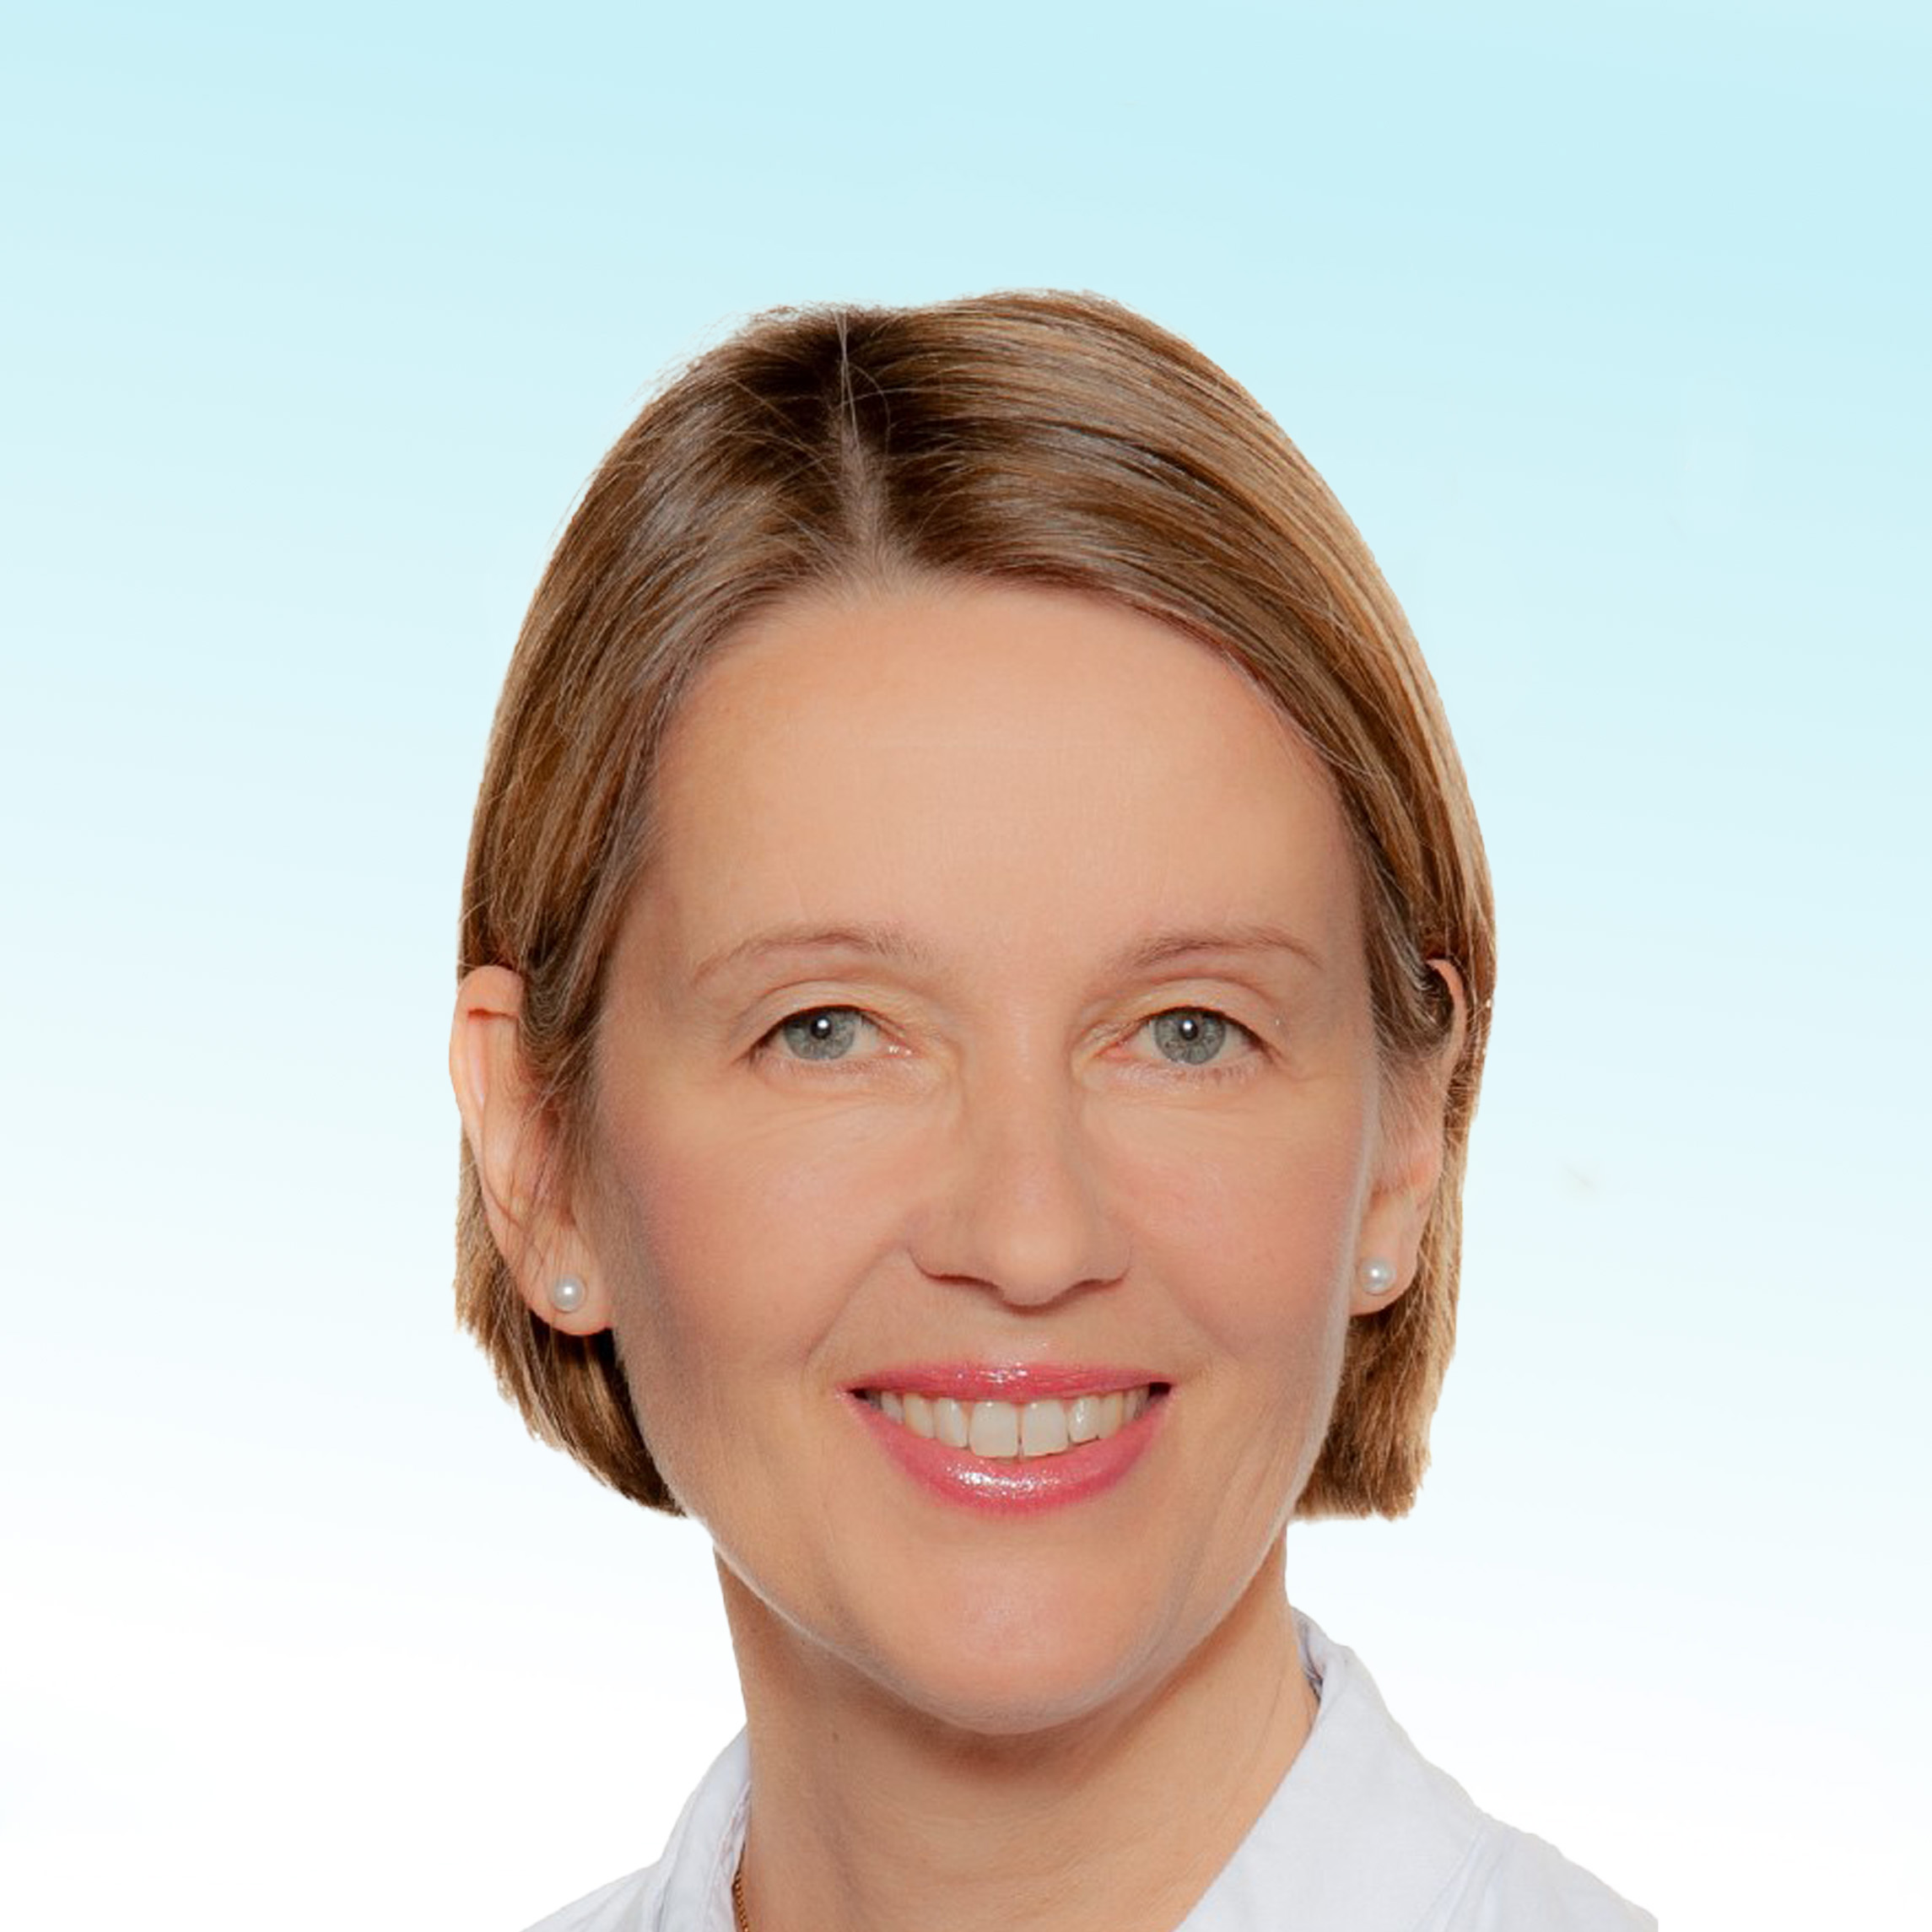 Dermatologue, Prof. Dr. med. Karin Hartmann